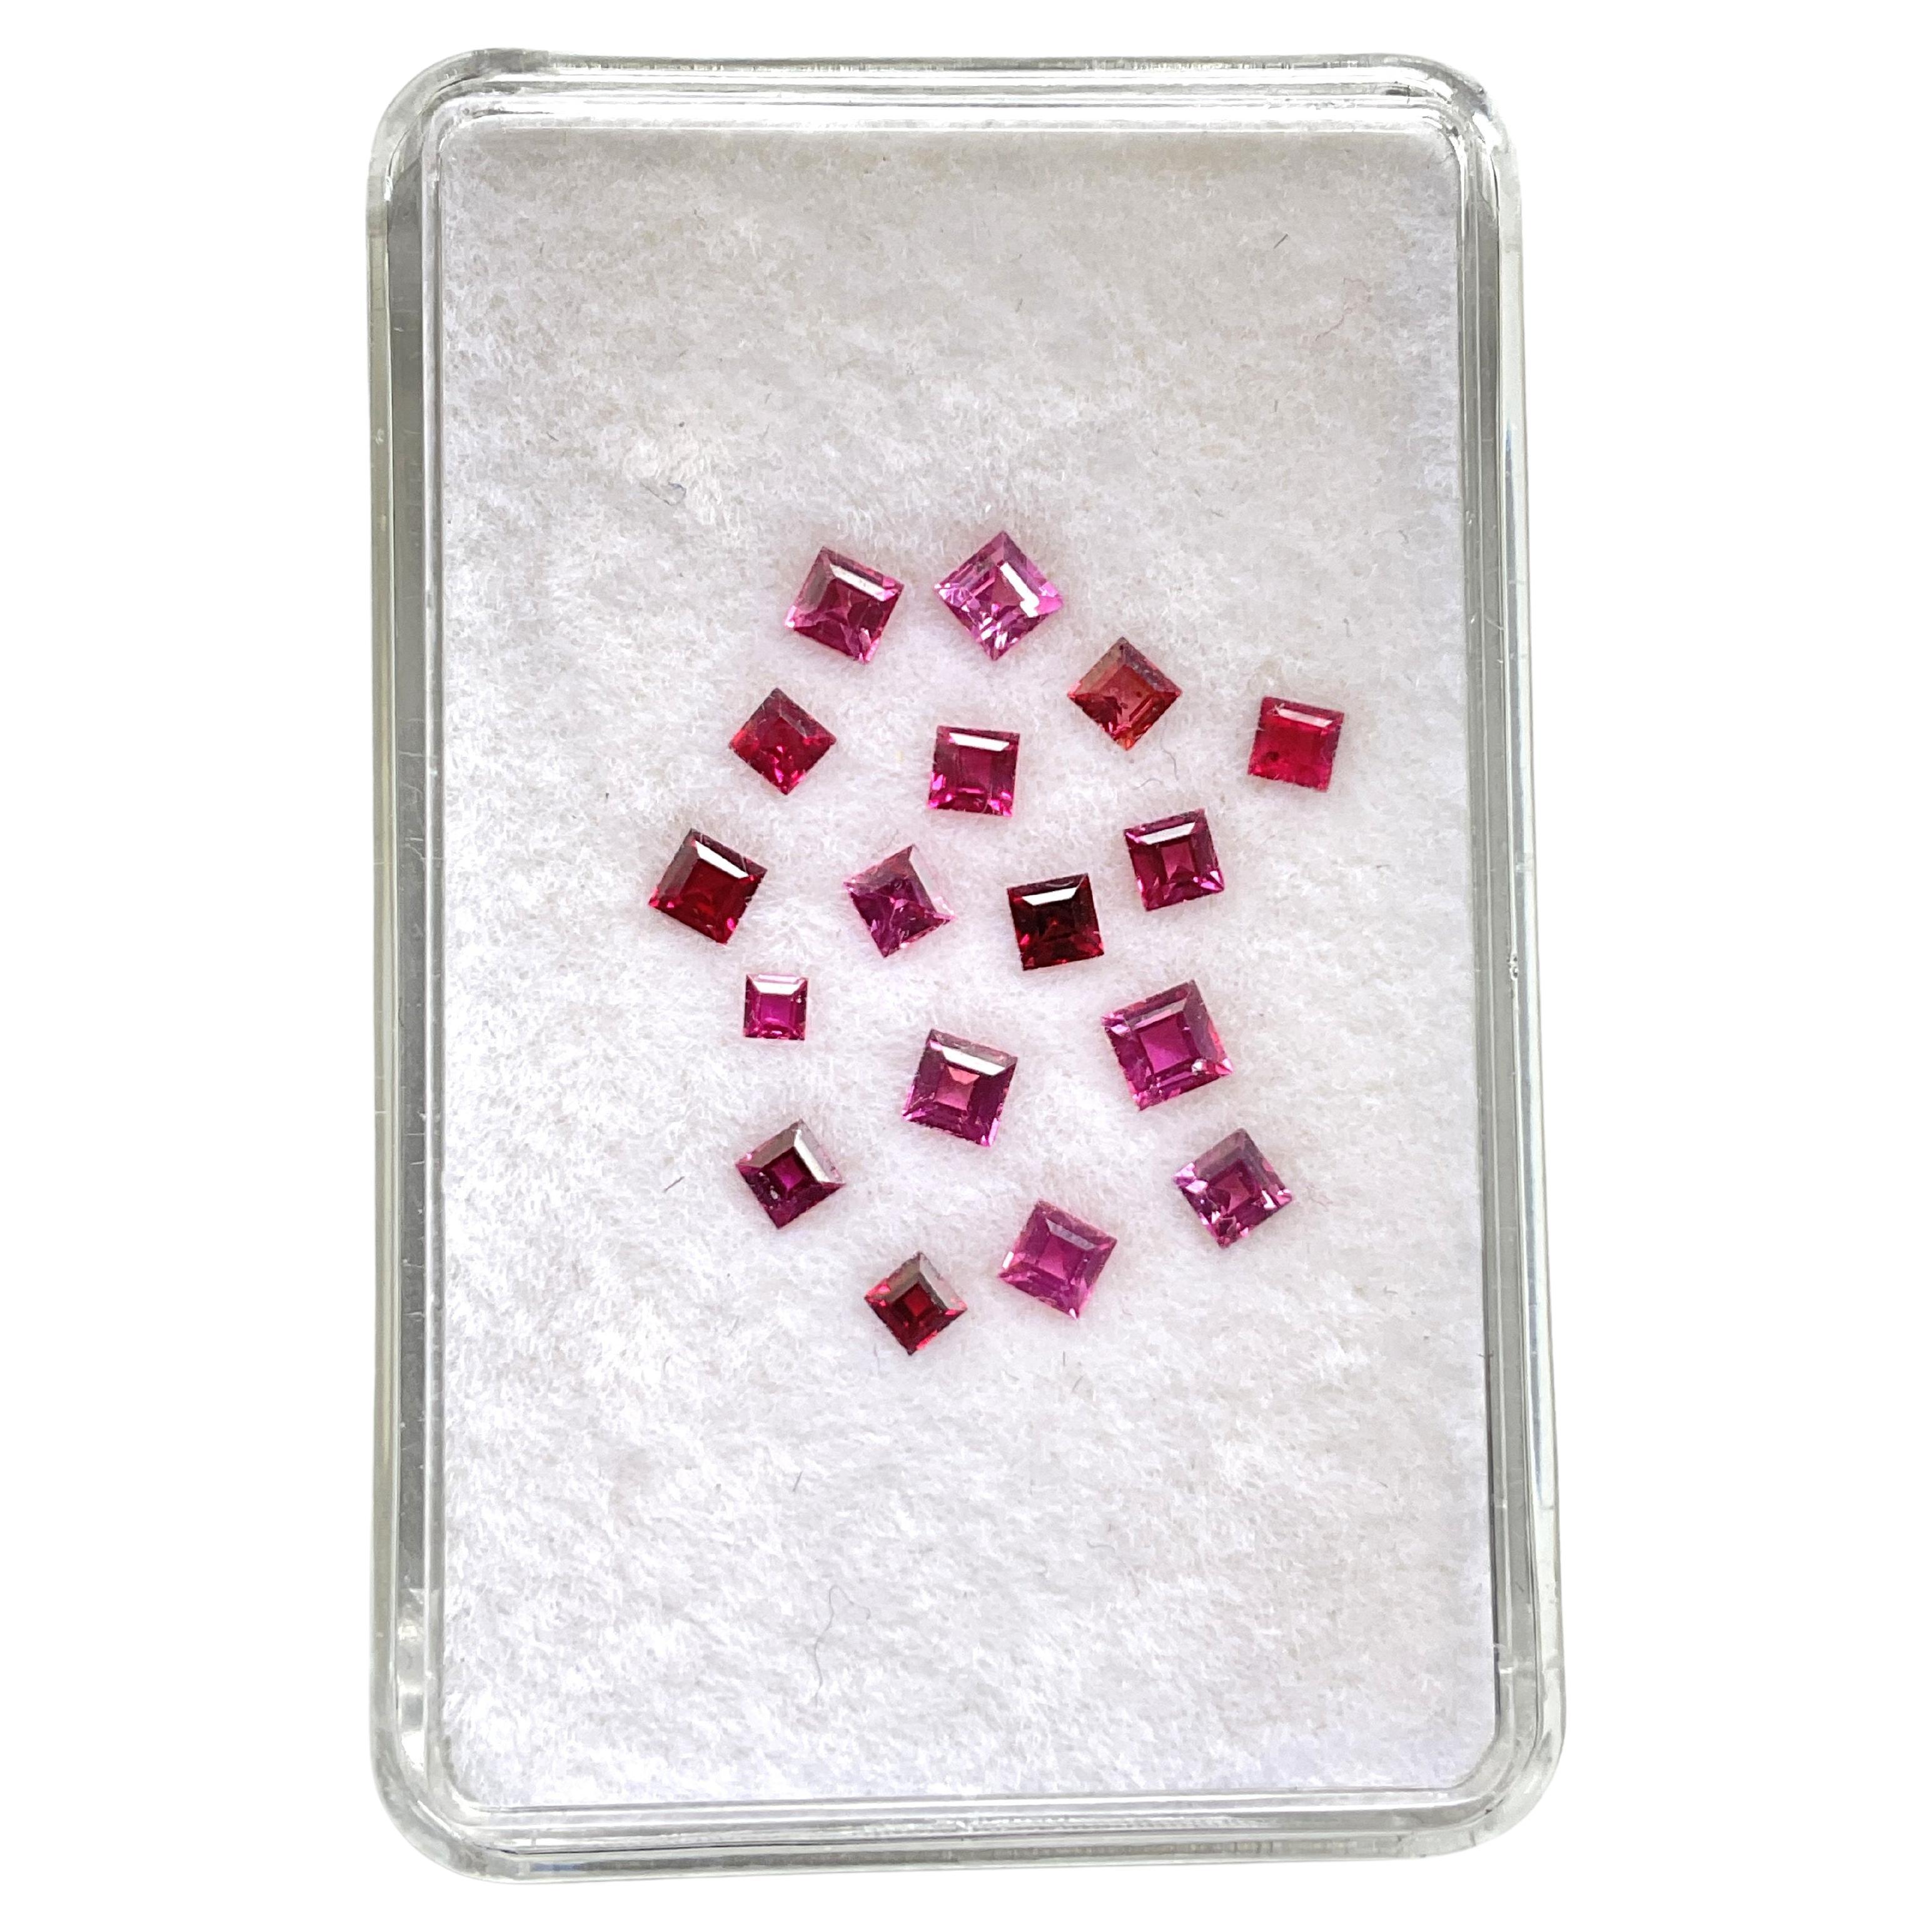 2.60 Carats Mozambique Ruby Top Quality Princess Cut stone No Heat Natural Gem For Sale